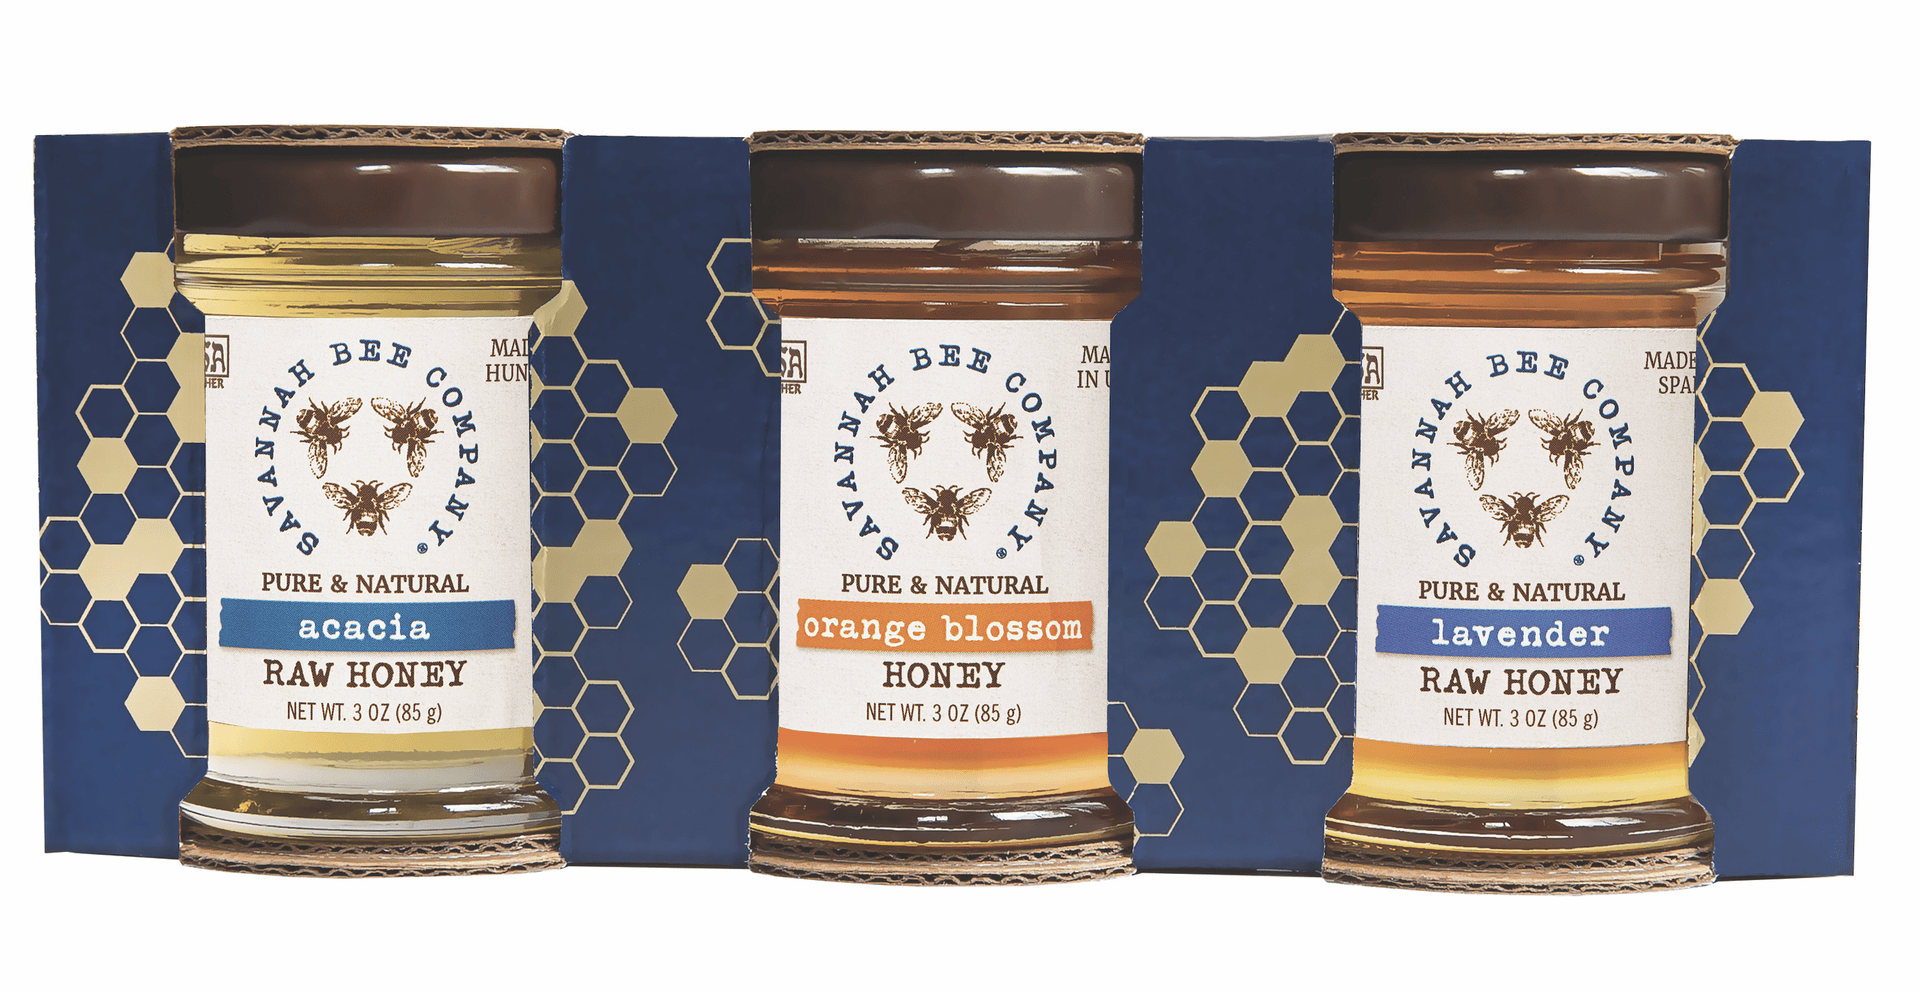 Savannah Bee Company Honey Artisanal Honey Sampler- 3oz Acacia, Orange Blossom, Lavender